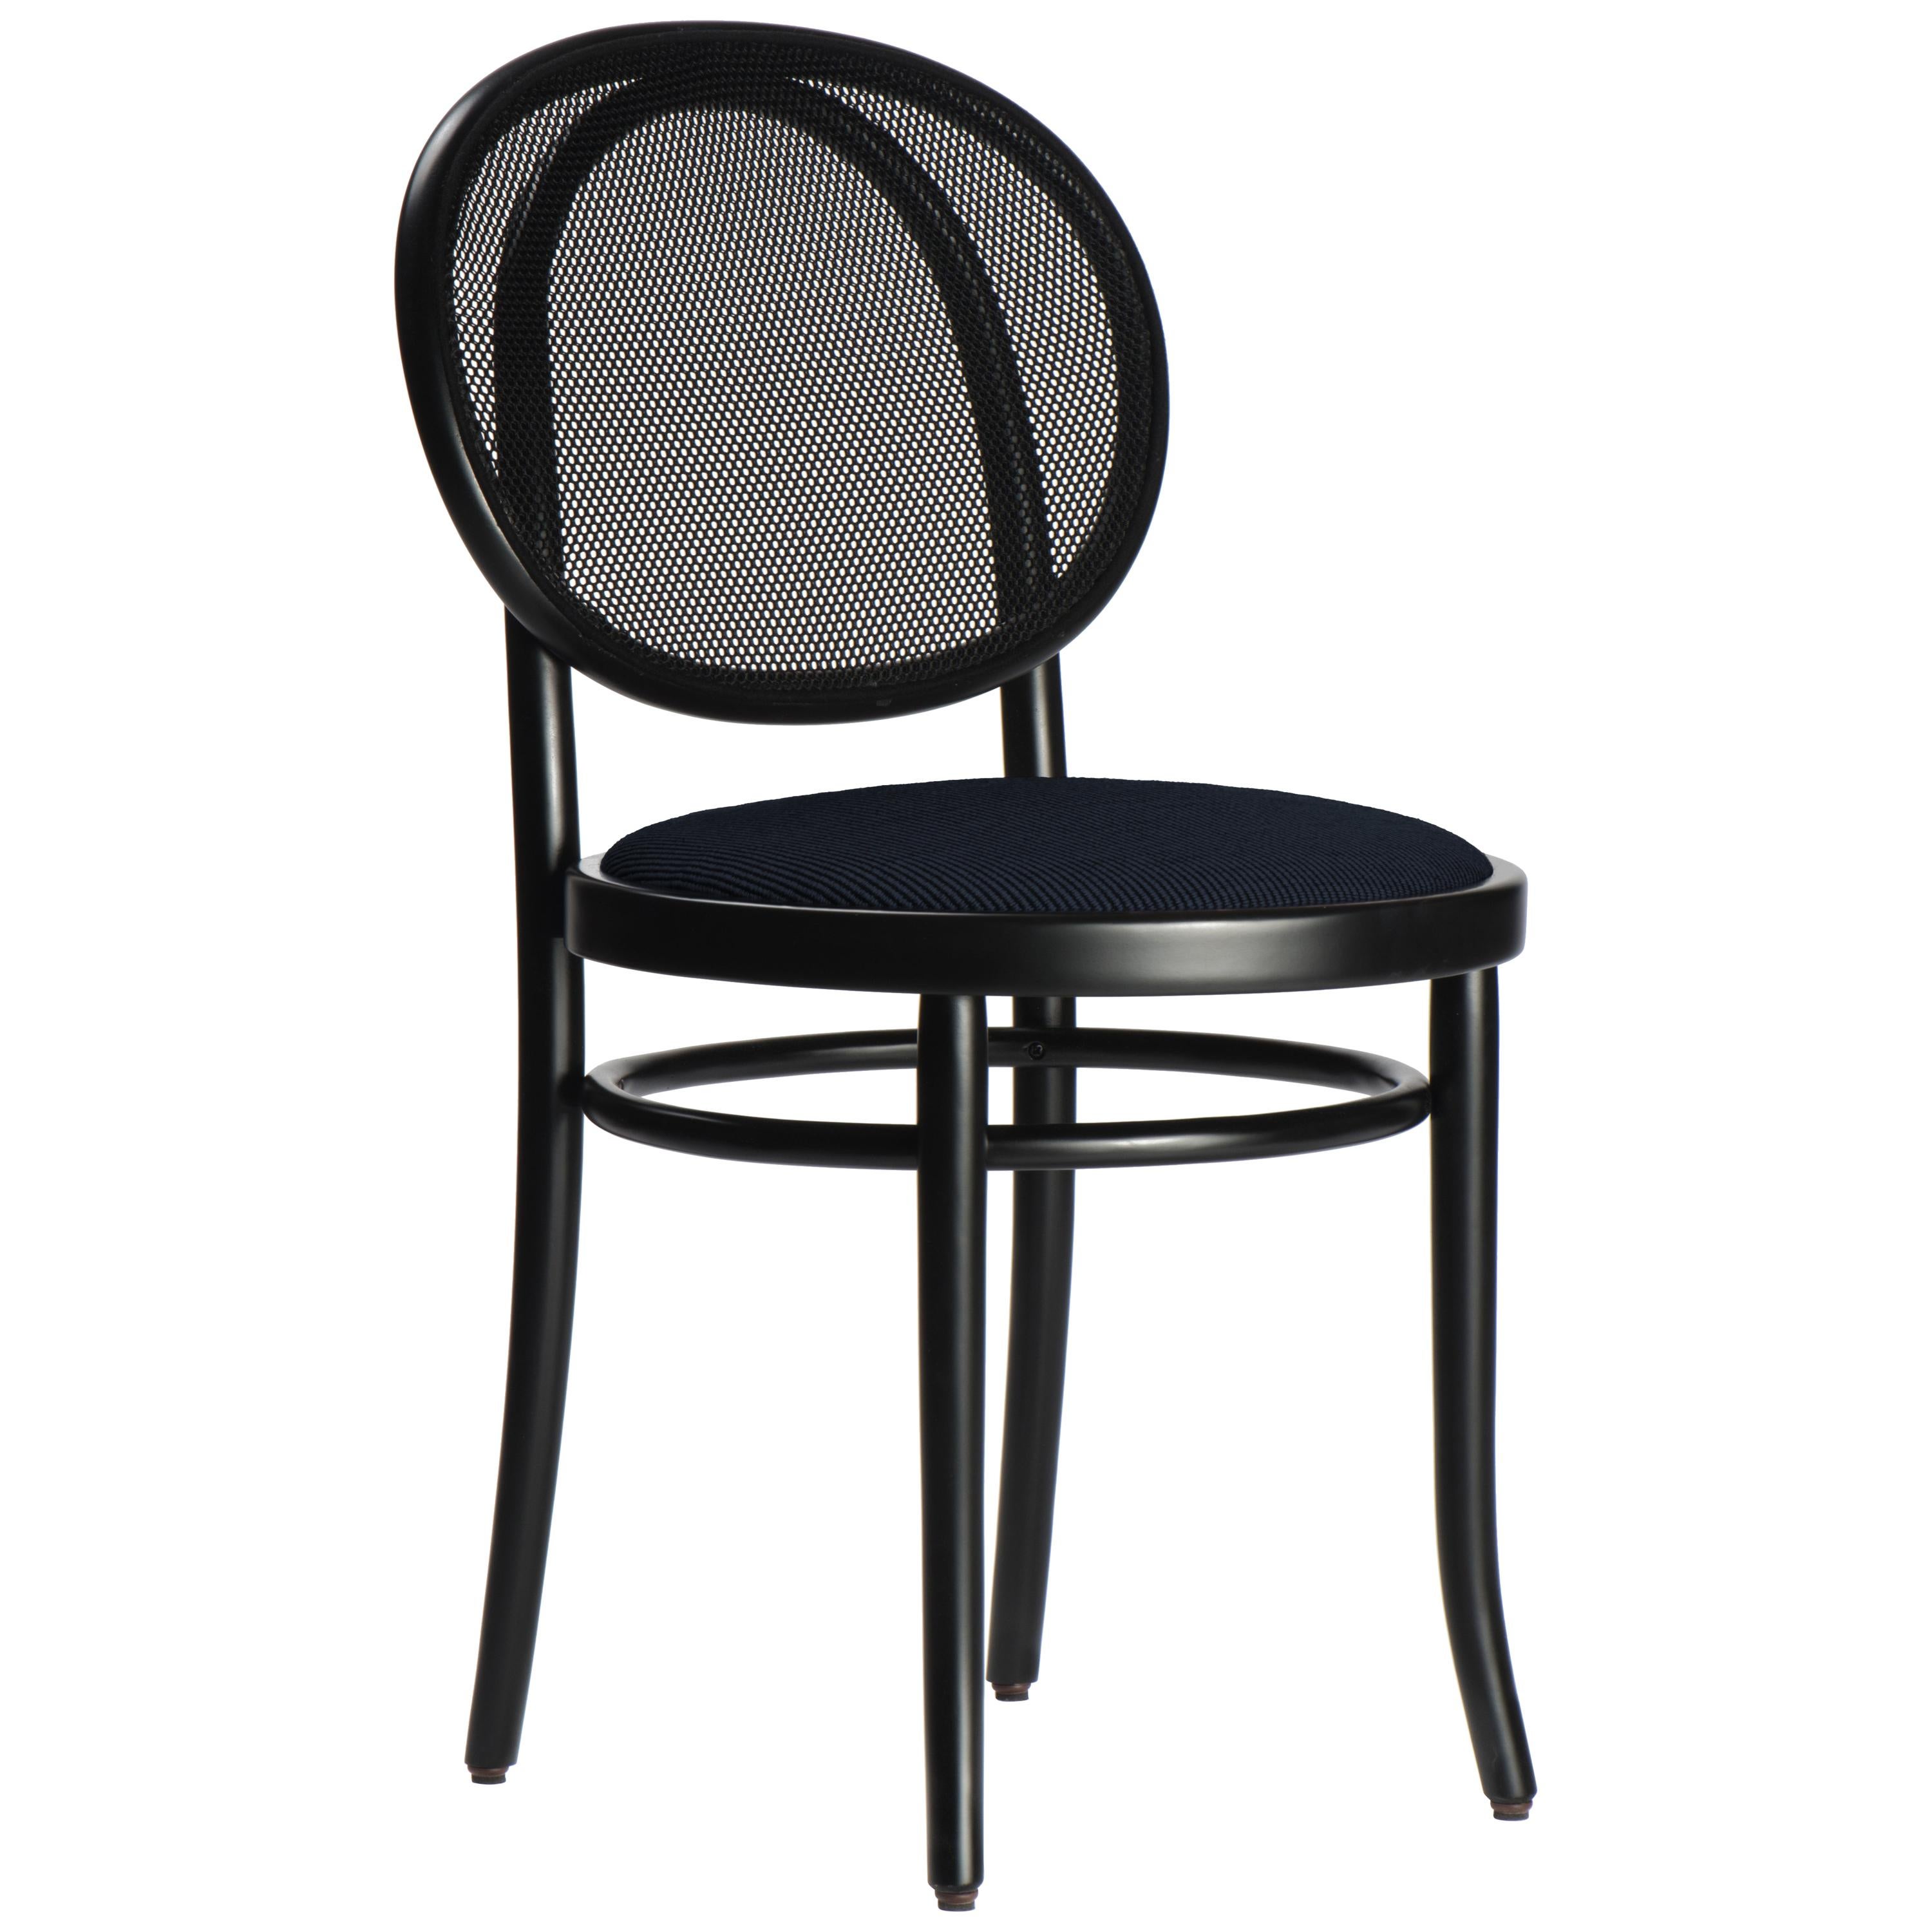 Gebrüder Thonet Vienna GmbH N.0 Black Chair with Mesh & Upholstered Seat